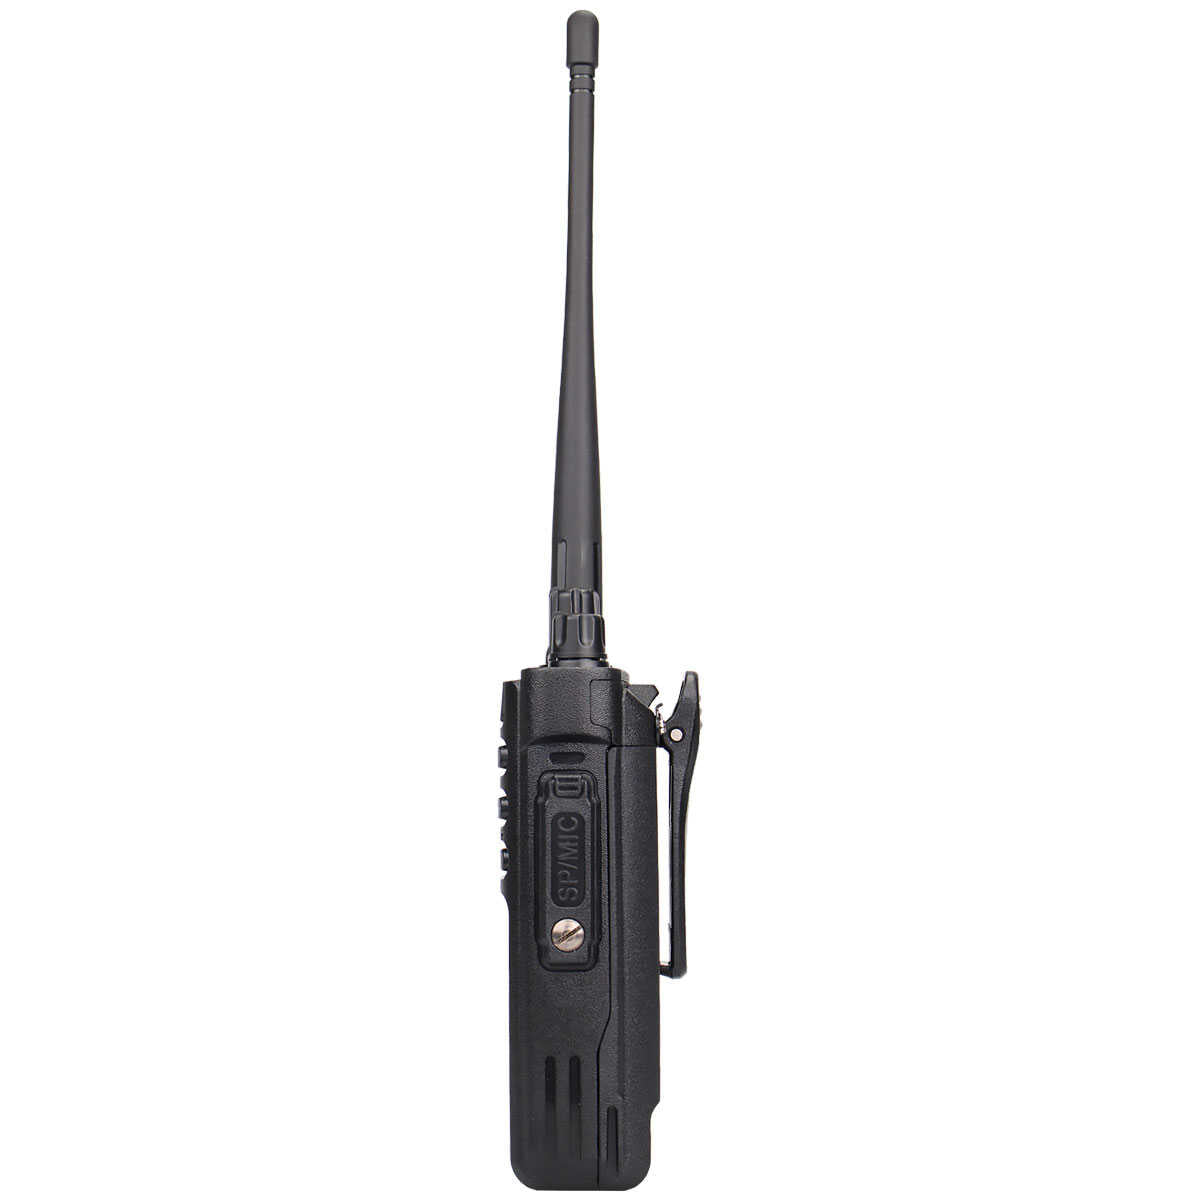 Retevis RT29D Long Range Waterproof Rugged Bluetooth DMR Radio